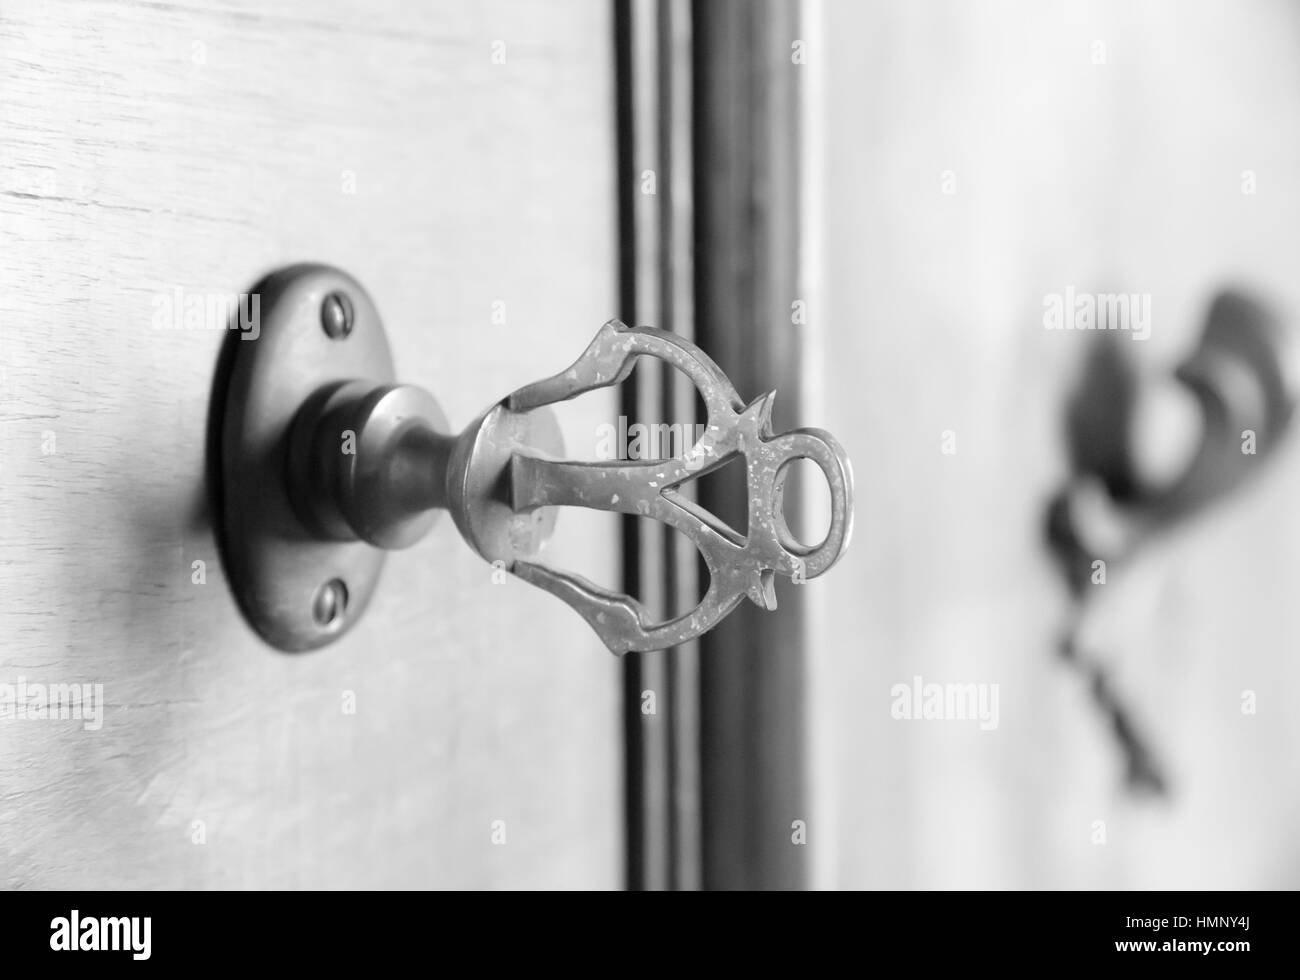 Vintage chiave in metallo con sfocato sfondo monocromo. Foto Stock